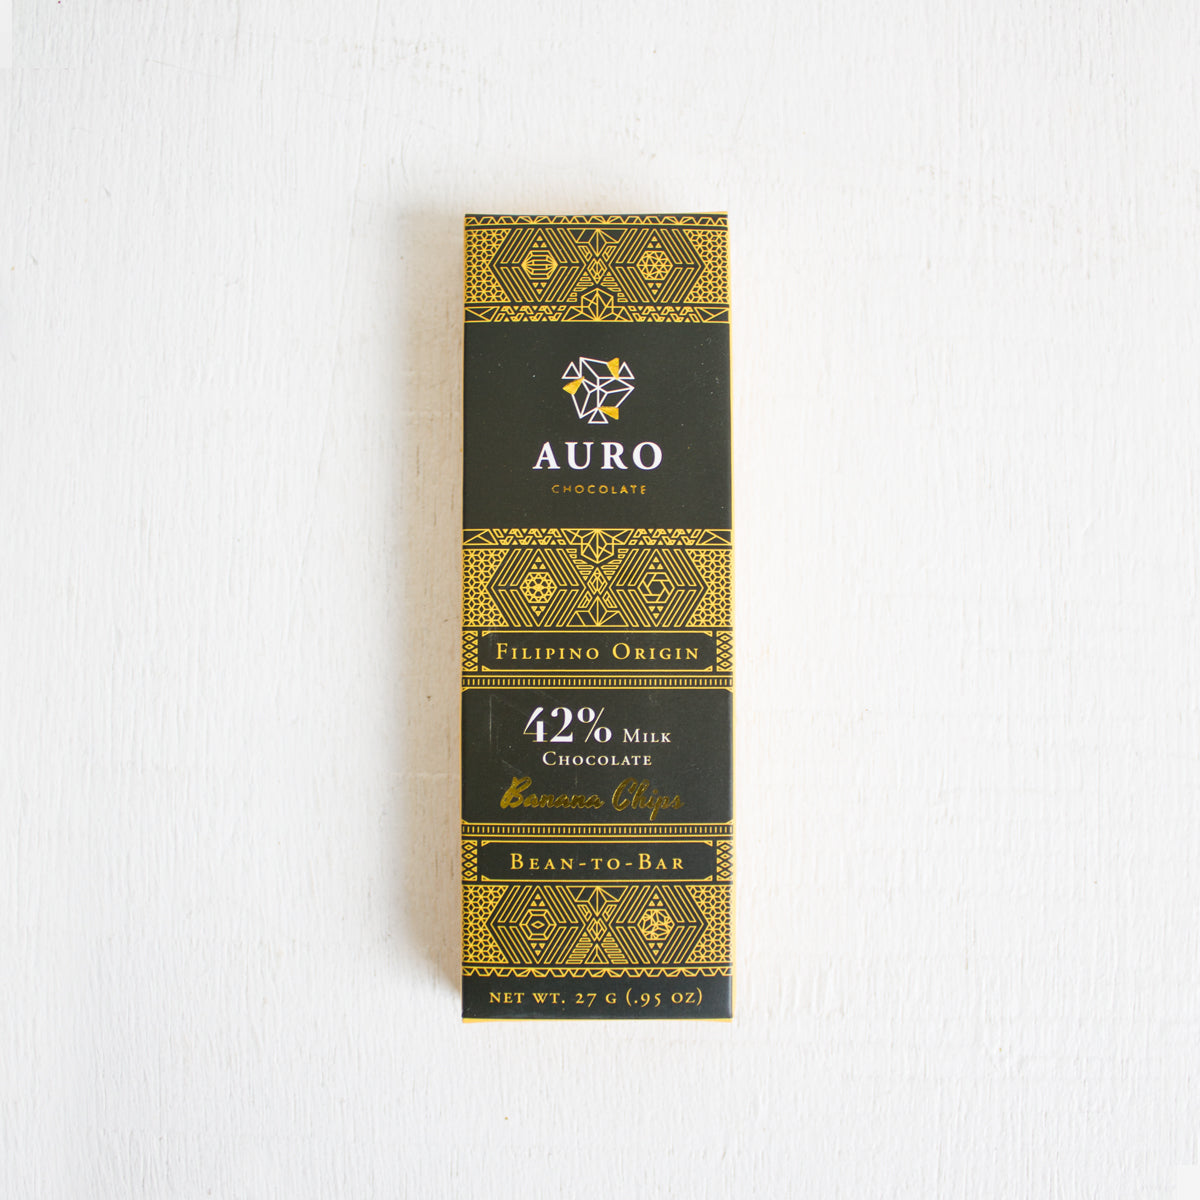 Auro Chocolate - Auro Heritage Collection Gift Set